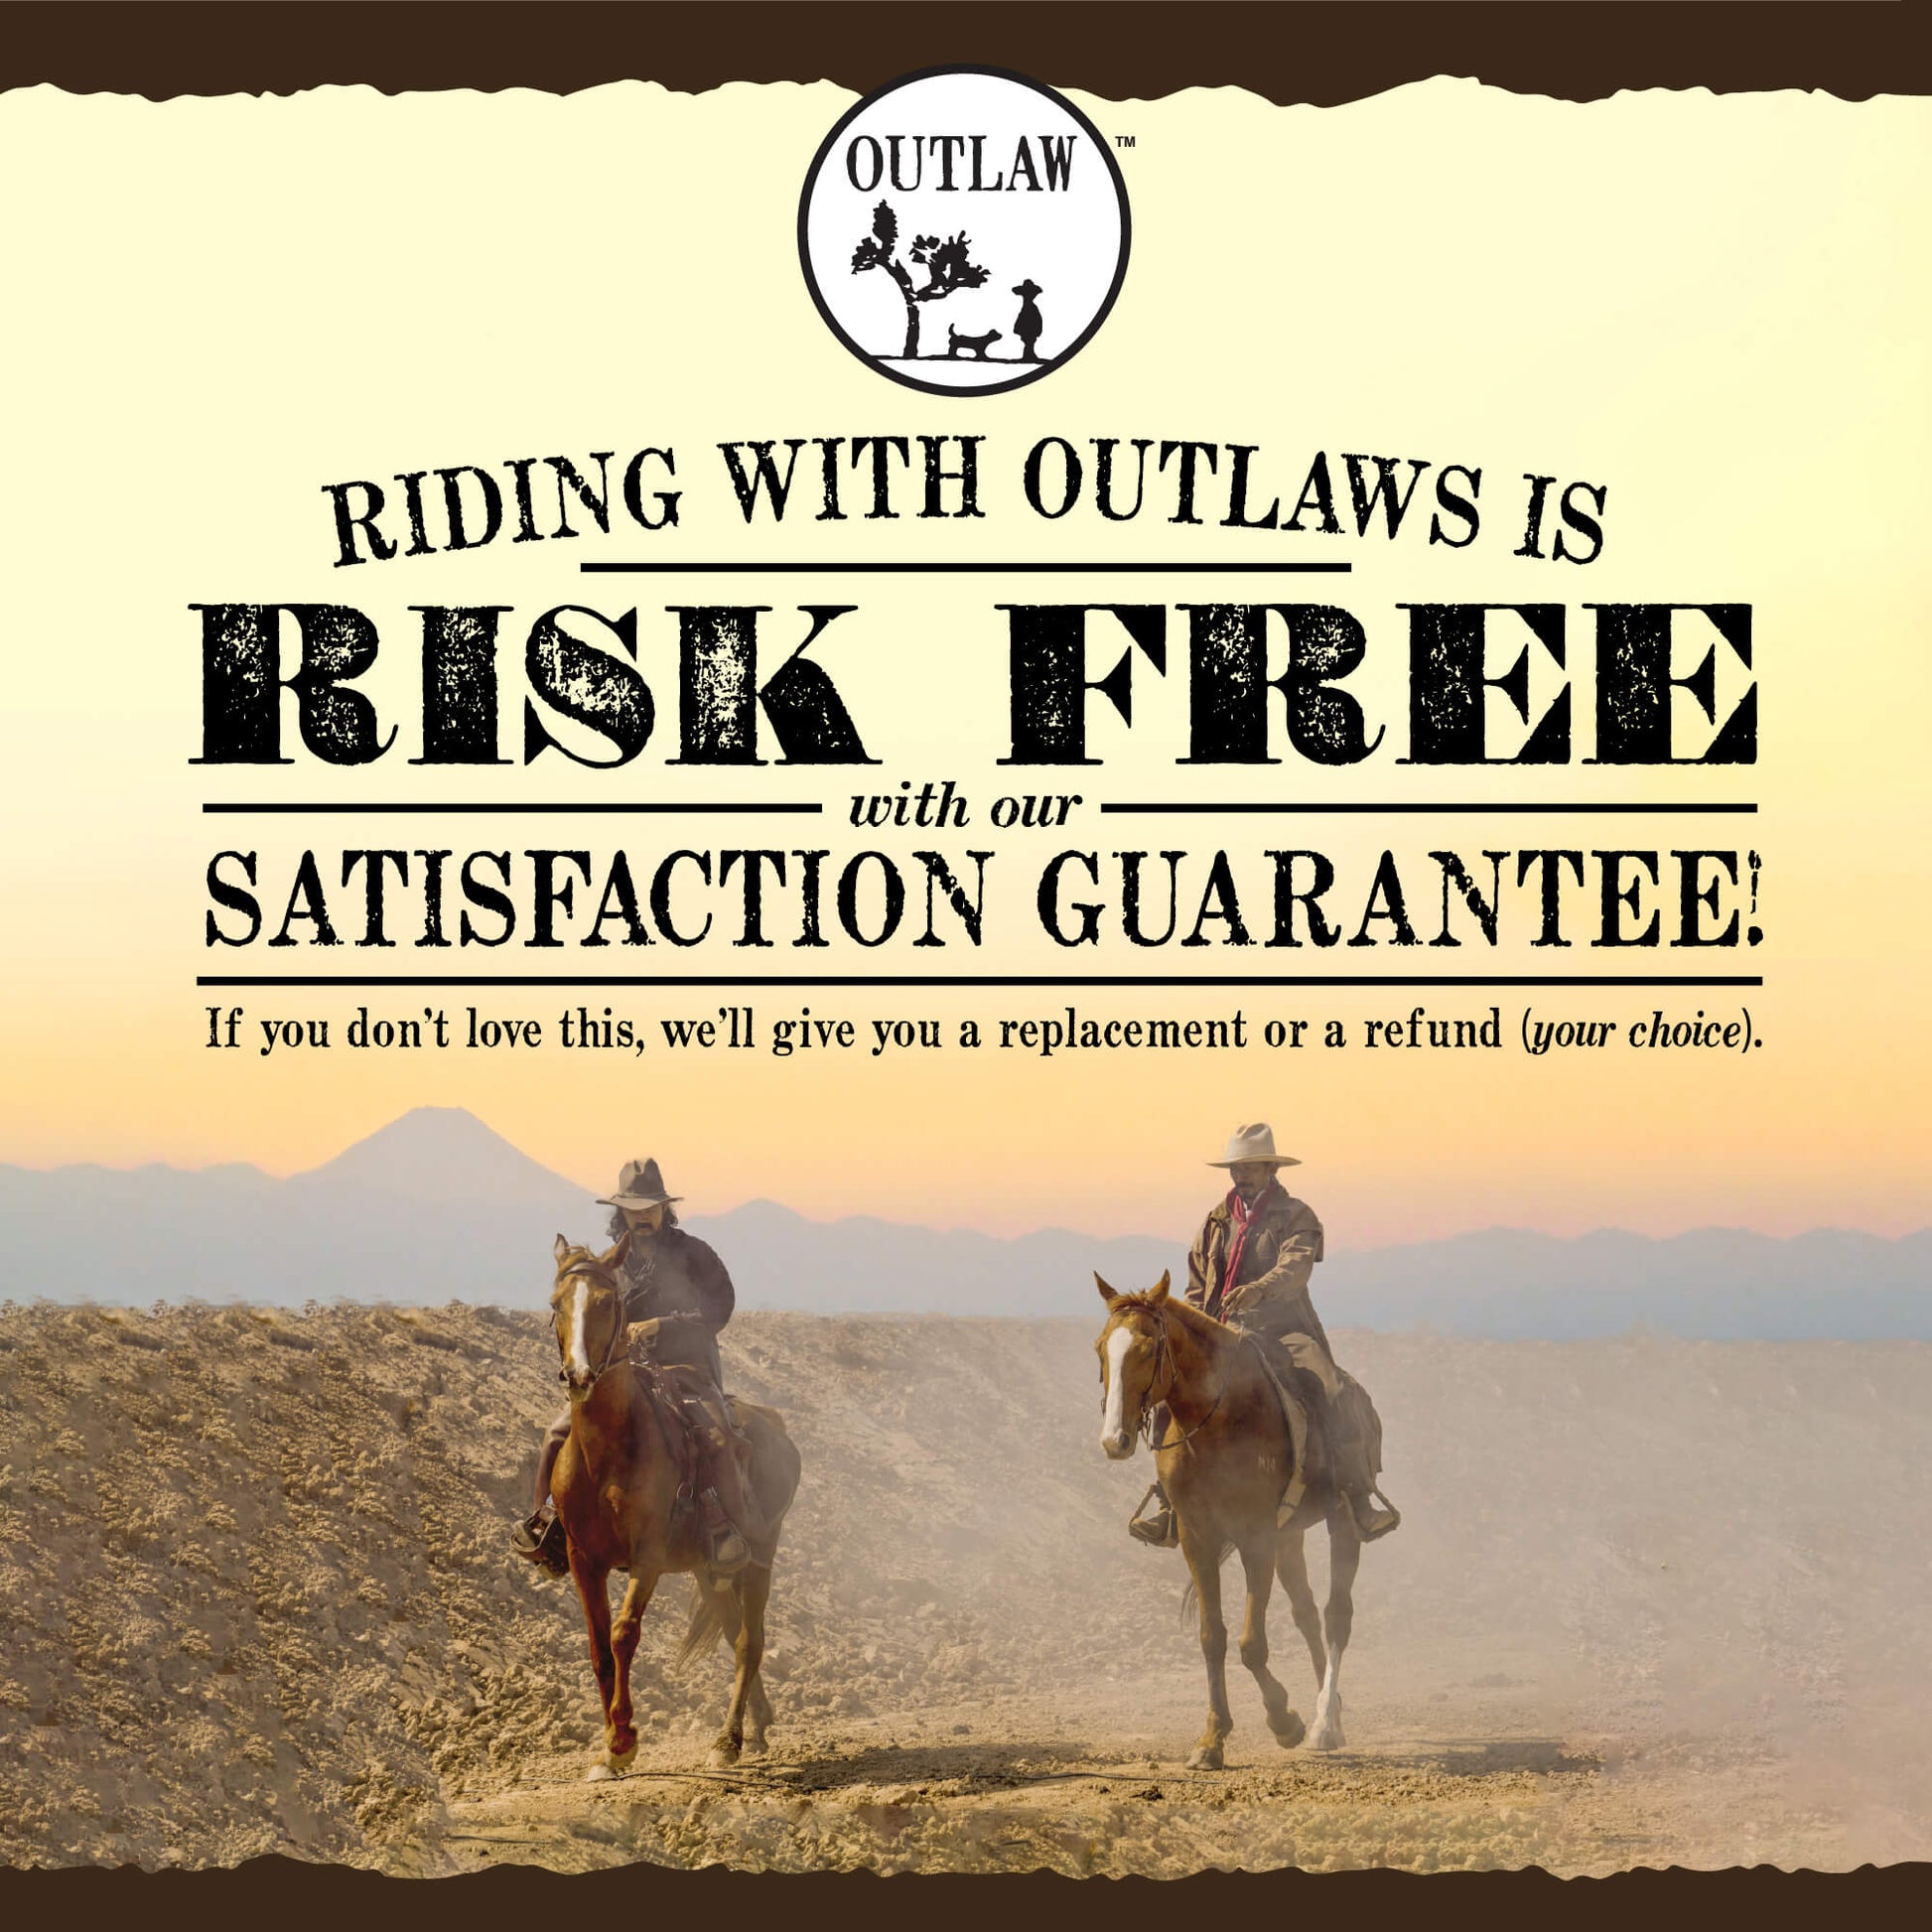 Outlaw satisfaction guarantee